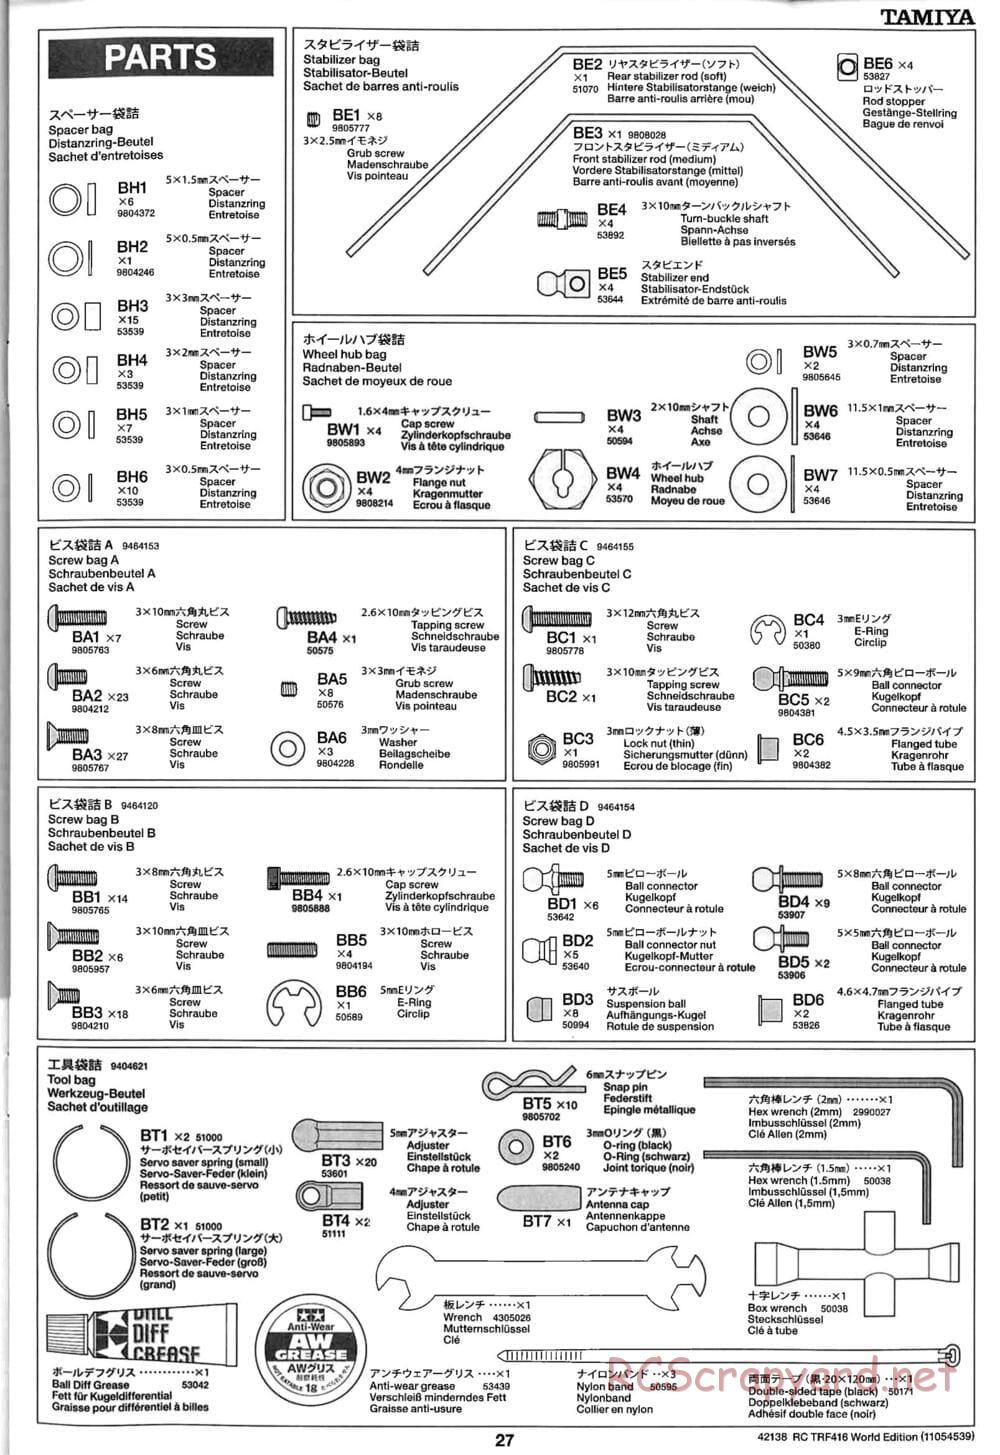 Tamiya - TRF416 World Edition Chassis - Manual - Page 27